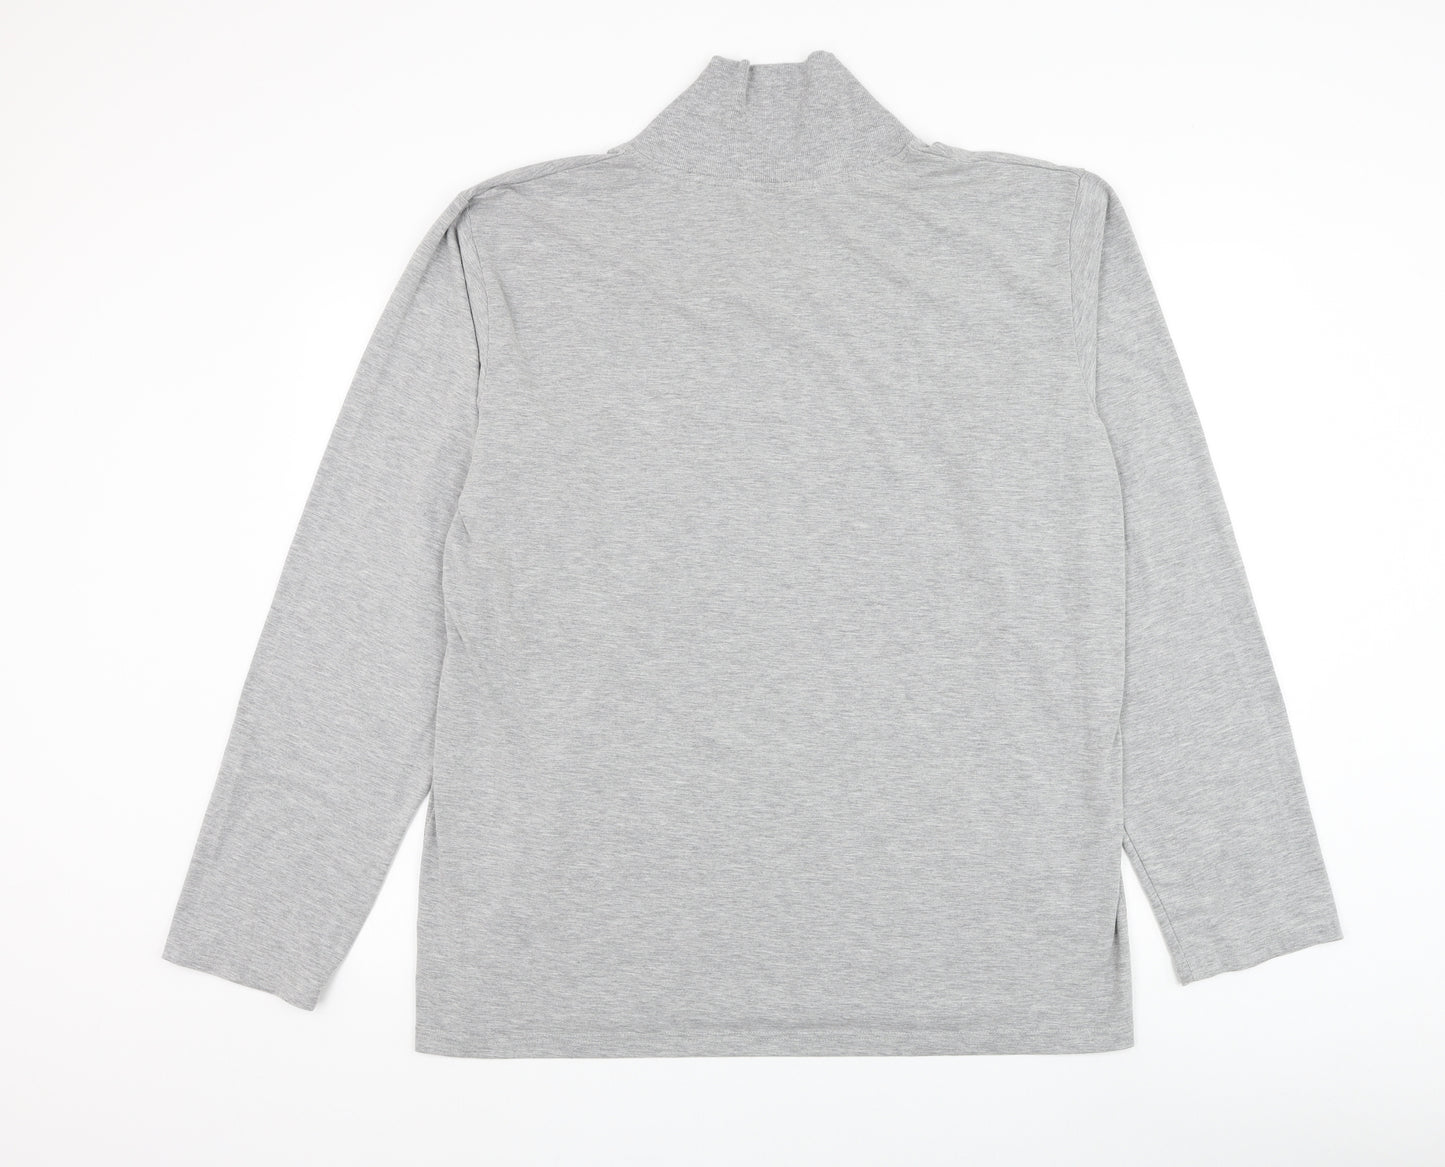 Hydra Mens Grey Polyester Pullover Sweatshirt Size L